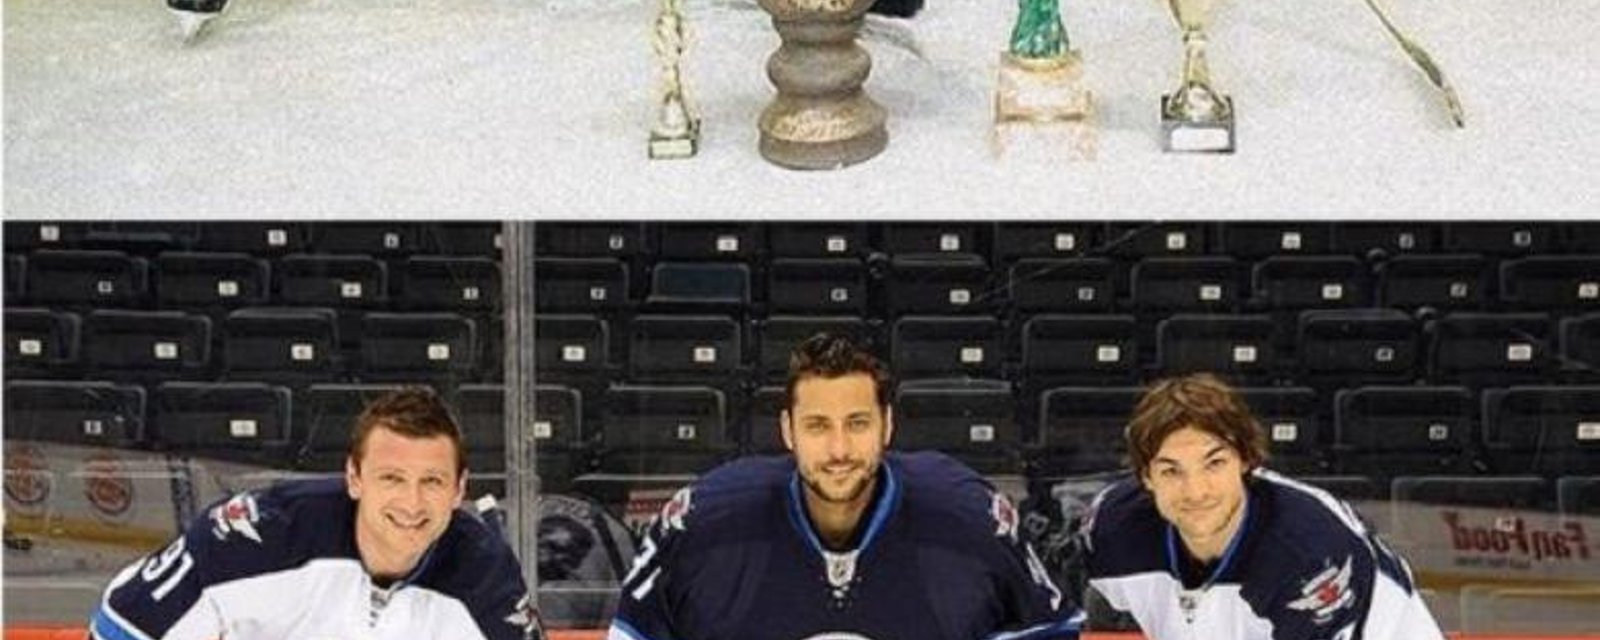 (Photos): Three NHL teammates recreate a photo from their childhood.